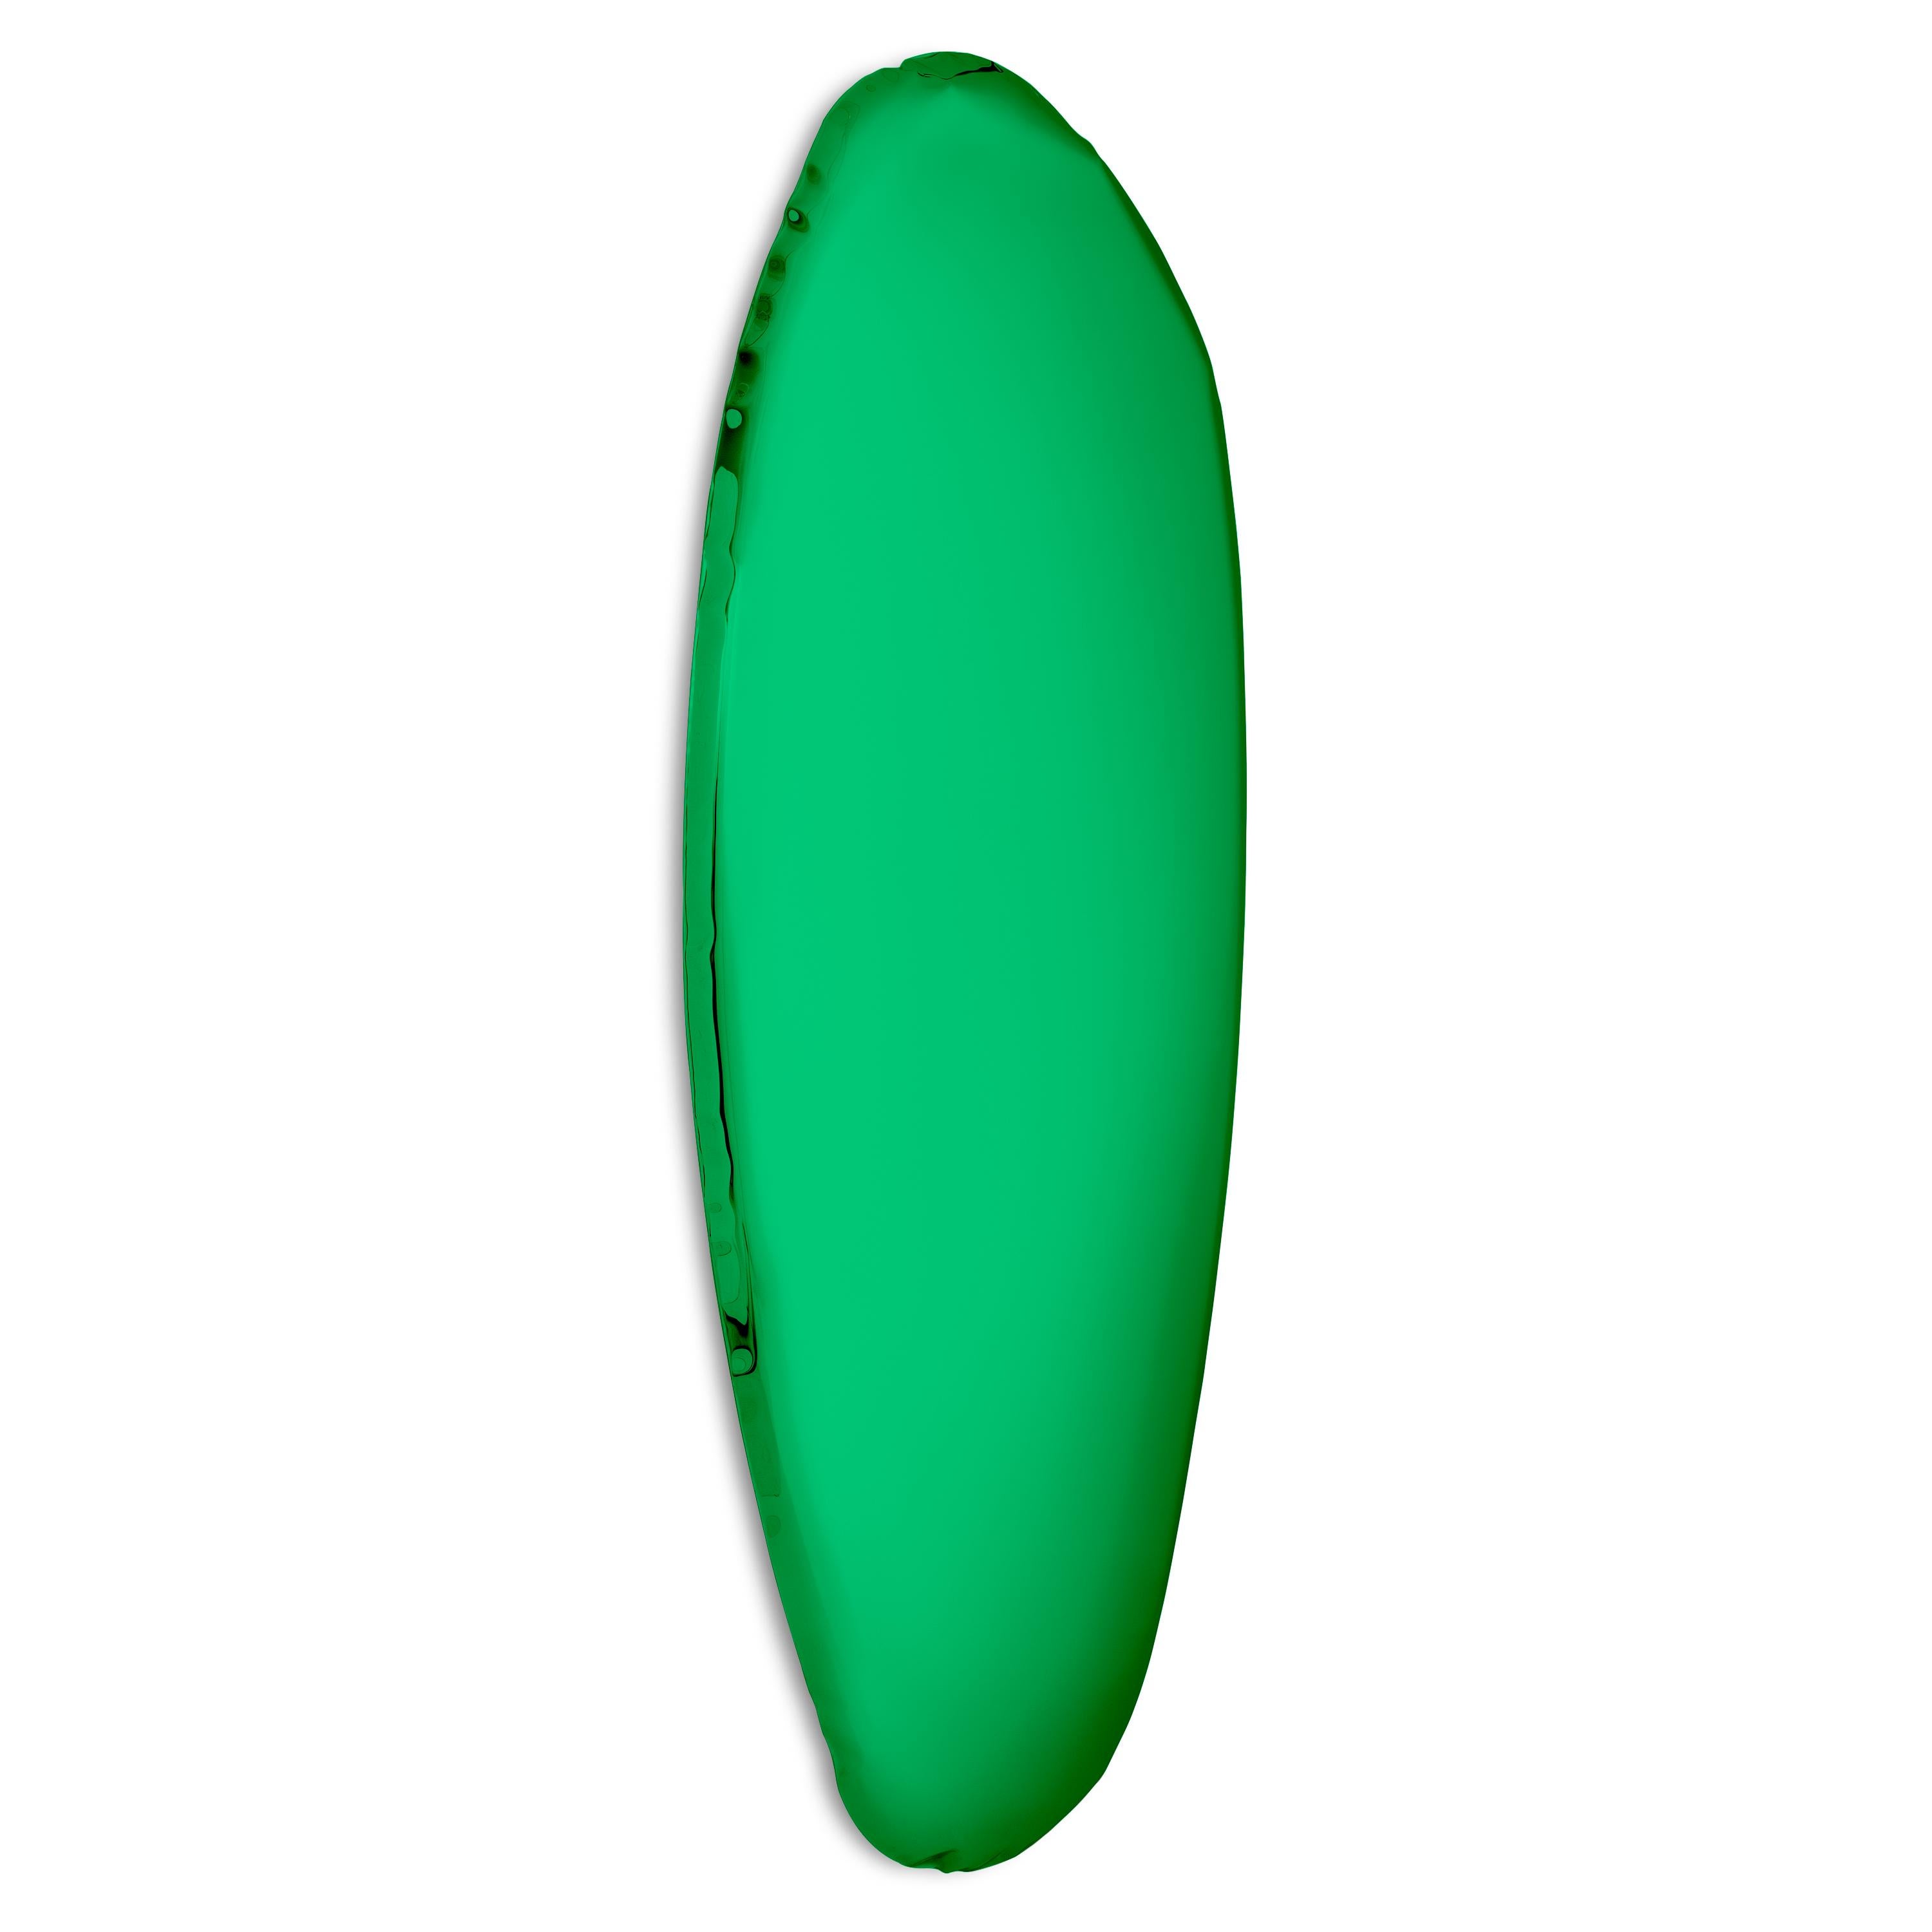 Emerald Tafla O1 wall mirror by Zieta
Dimensions: D 6 x W 100 x H 225 cm 
Material: Stainless steel.
Finish: Emerald. 
Available finishes: Stainless Steel, White Matt, Sapphire/Emerald, Sapphire, Emerald, Deep space blue, Dark matter, or red Rubin.